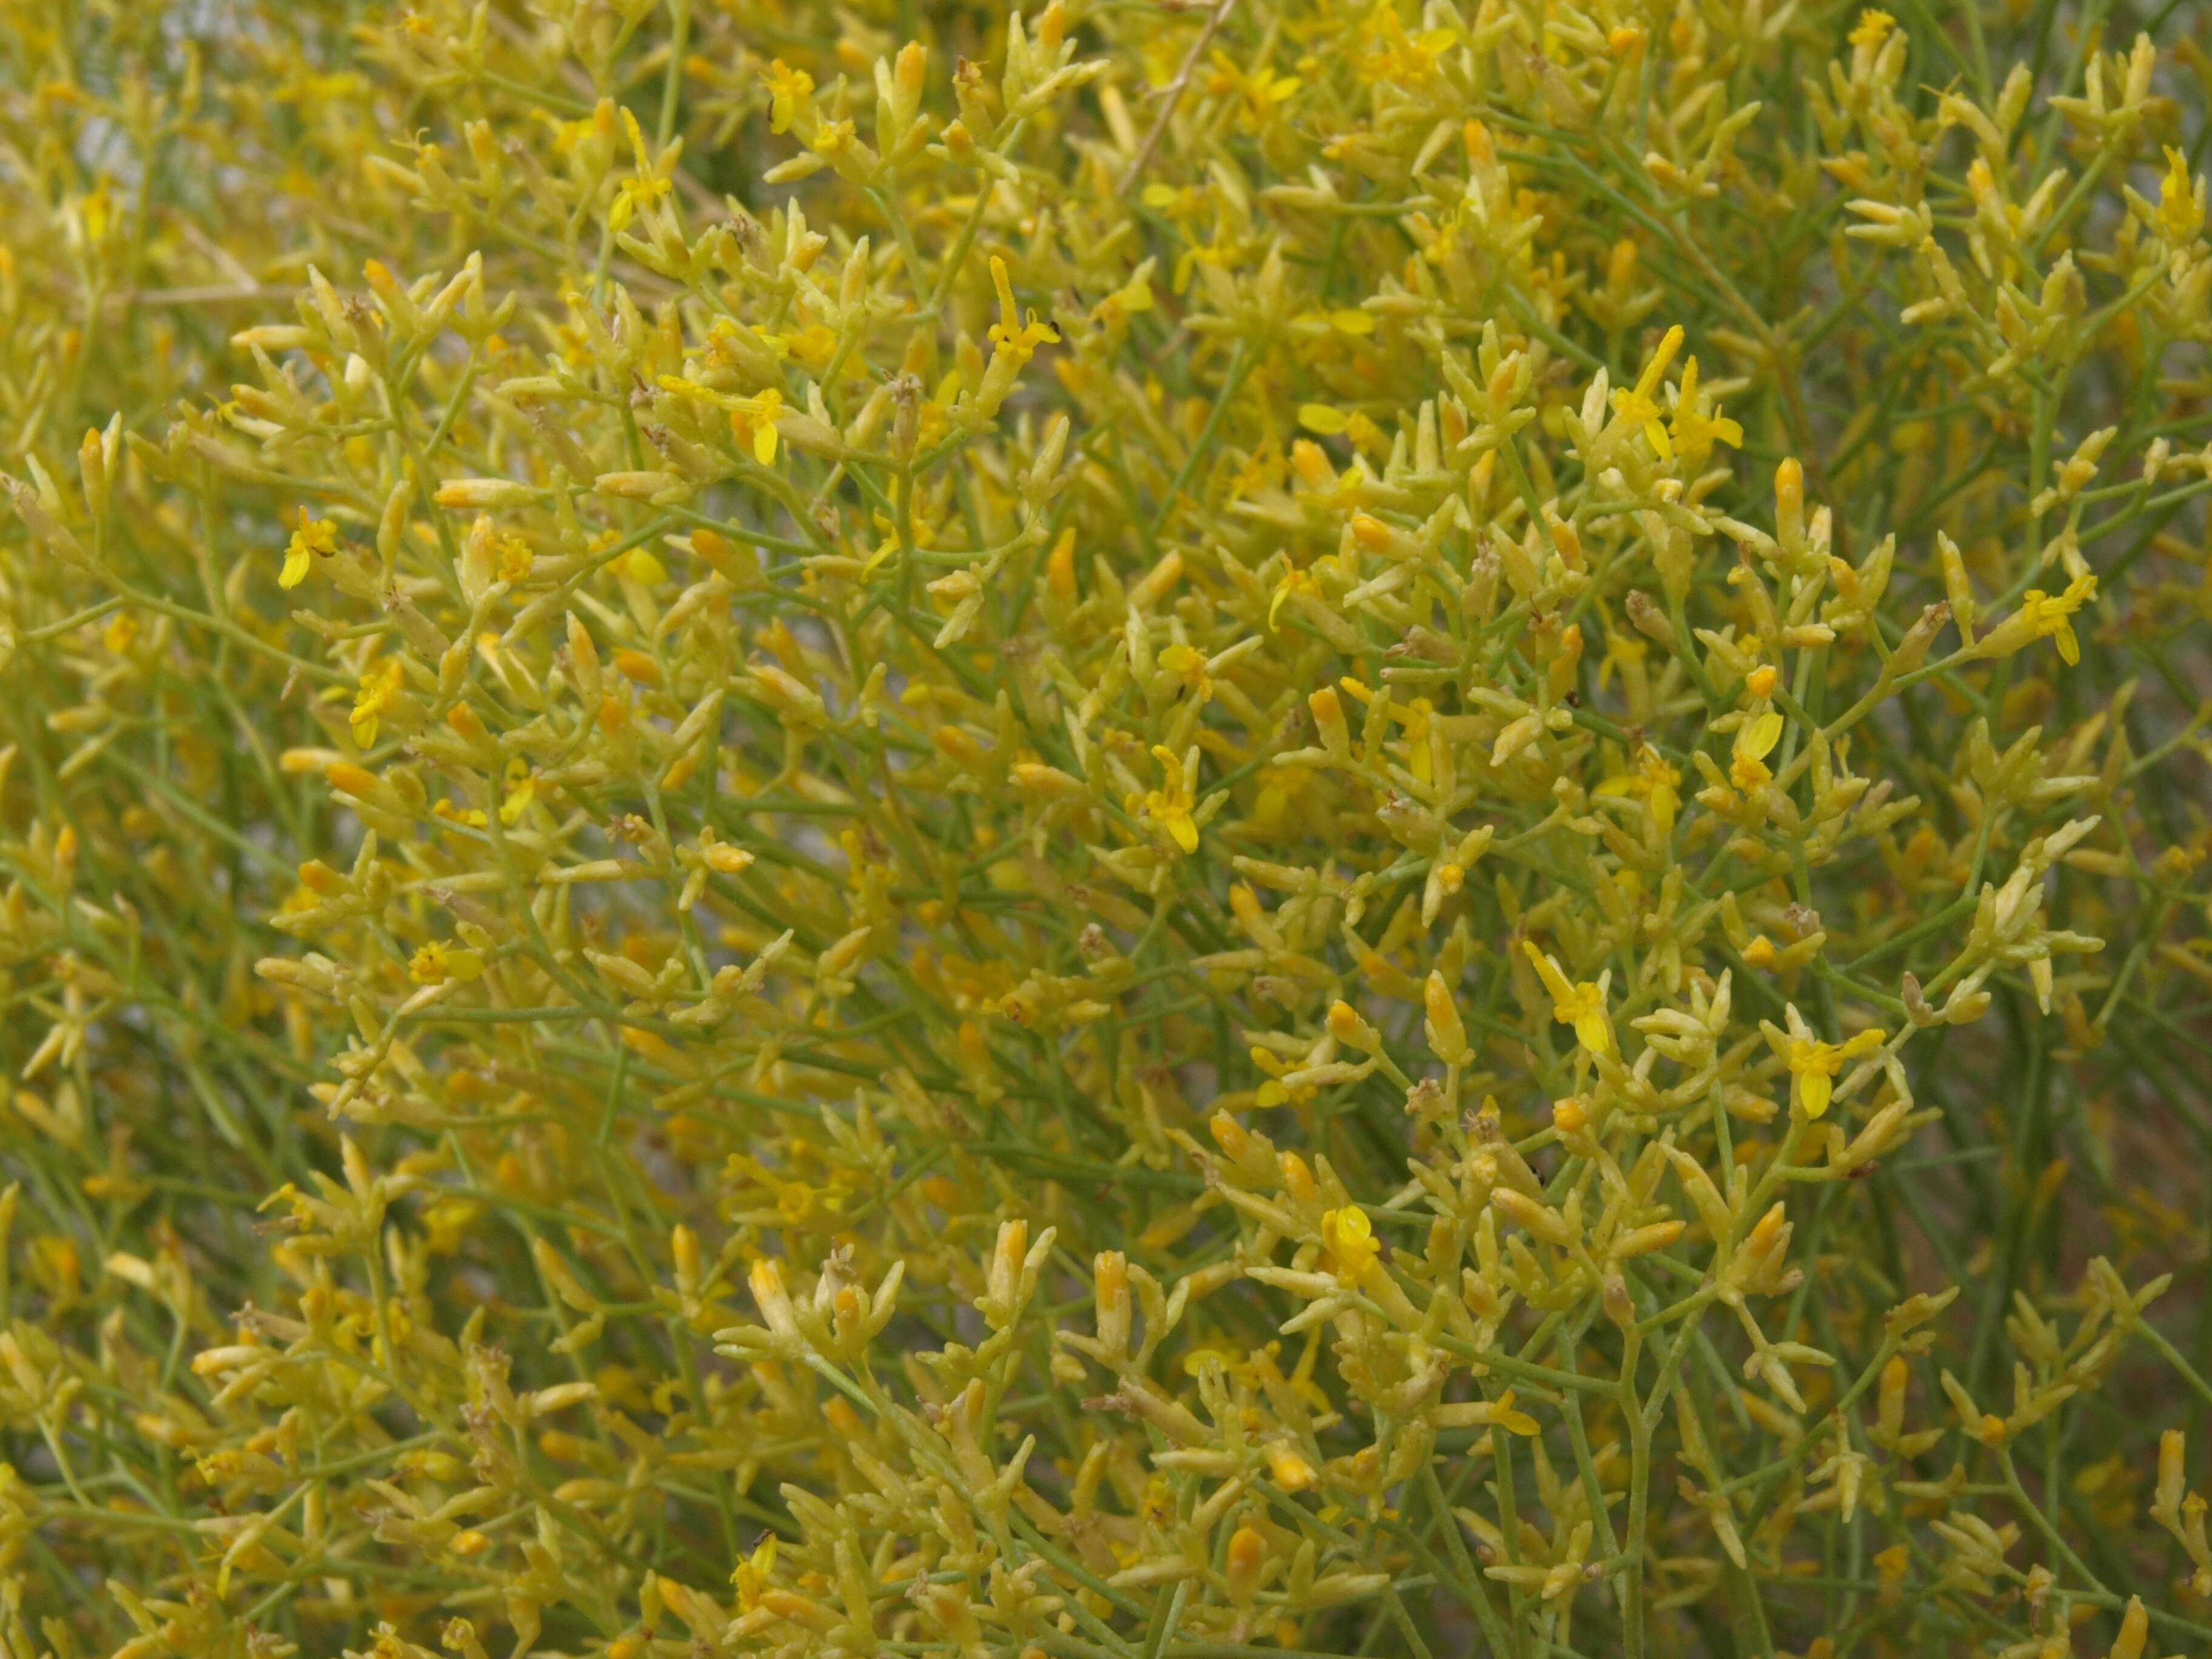 Image of snakeweed